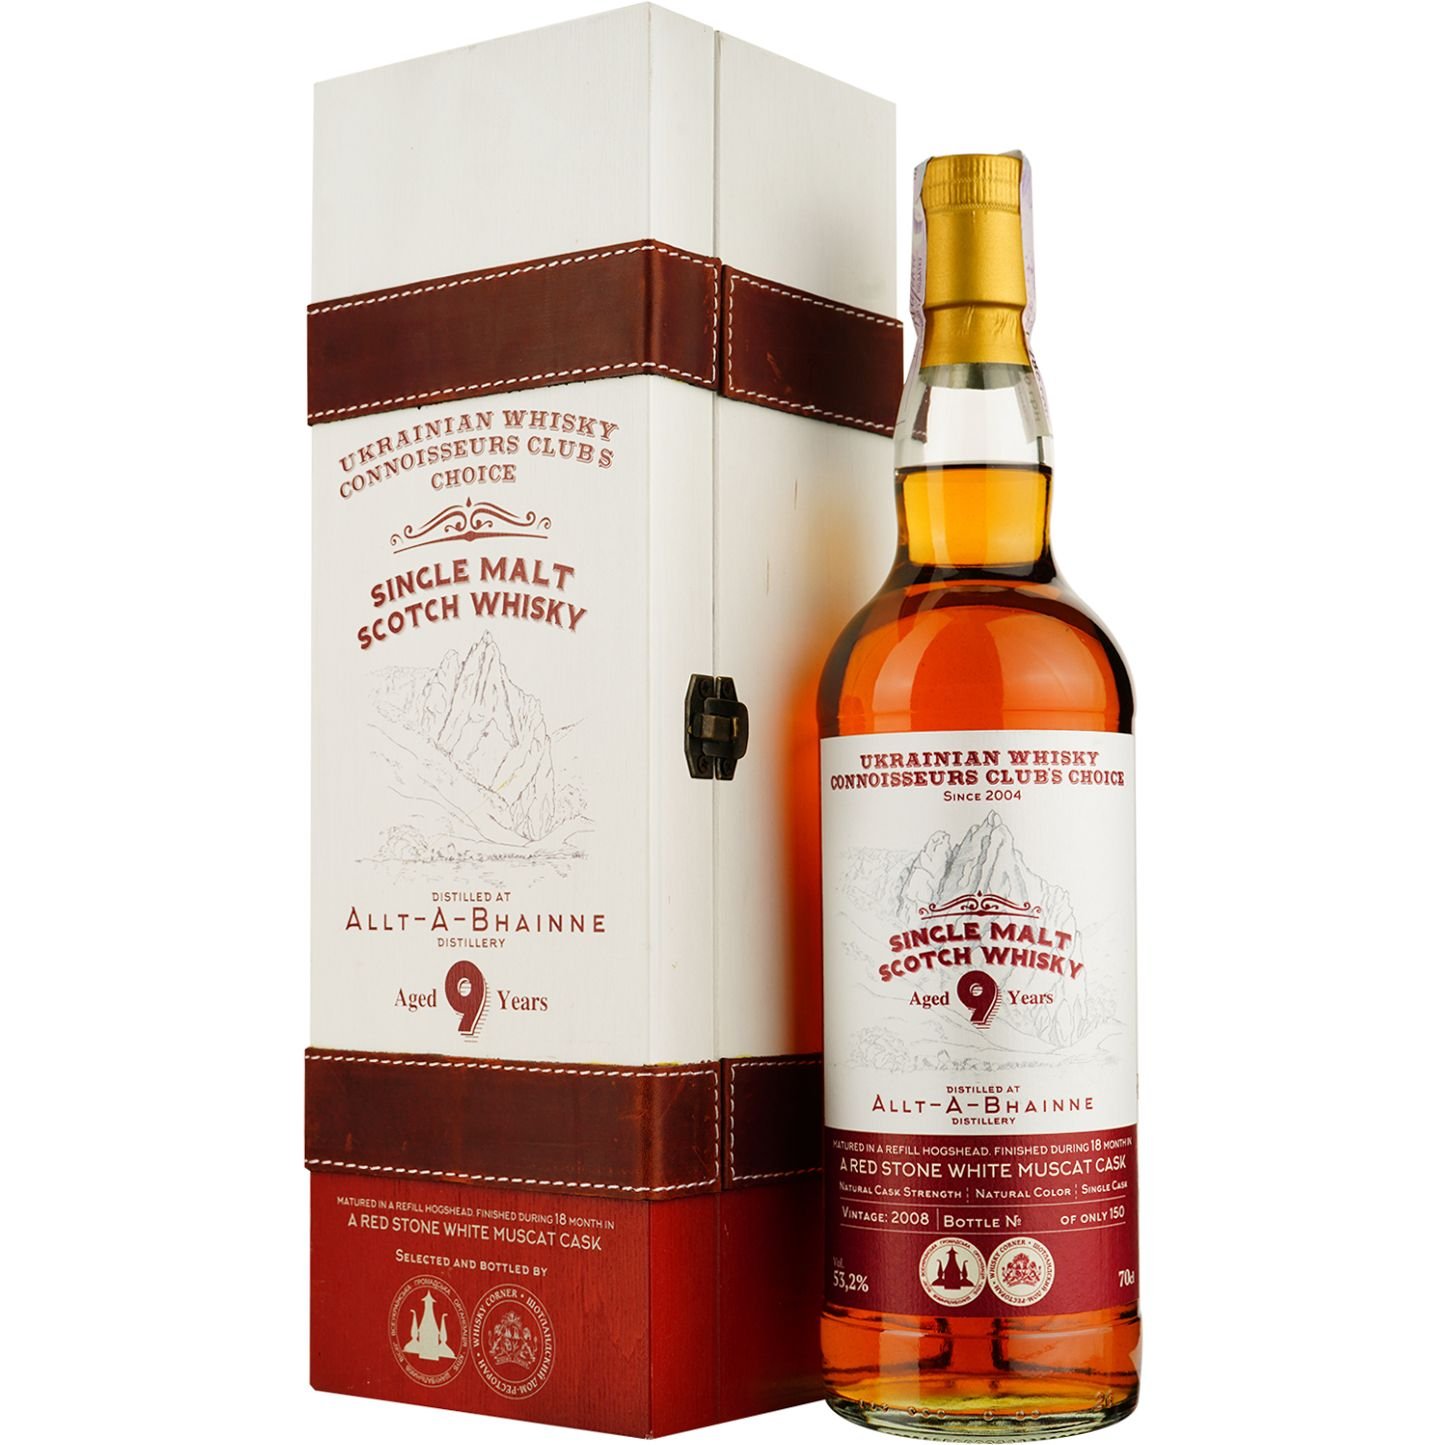 Виски Allt-A-Bhainne 9 Years Old White Muscat Red Stone Single Malt Scotch Whisky, в подарочной упаковке, 53,2%, 0,7 л - фото 1